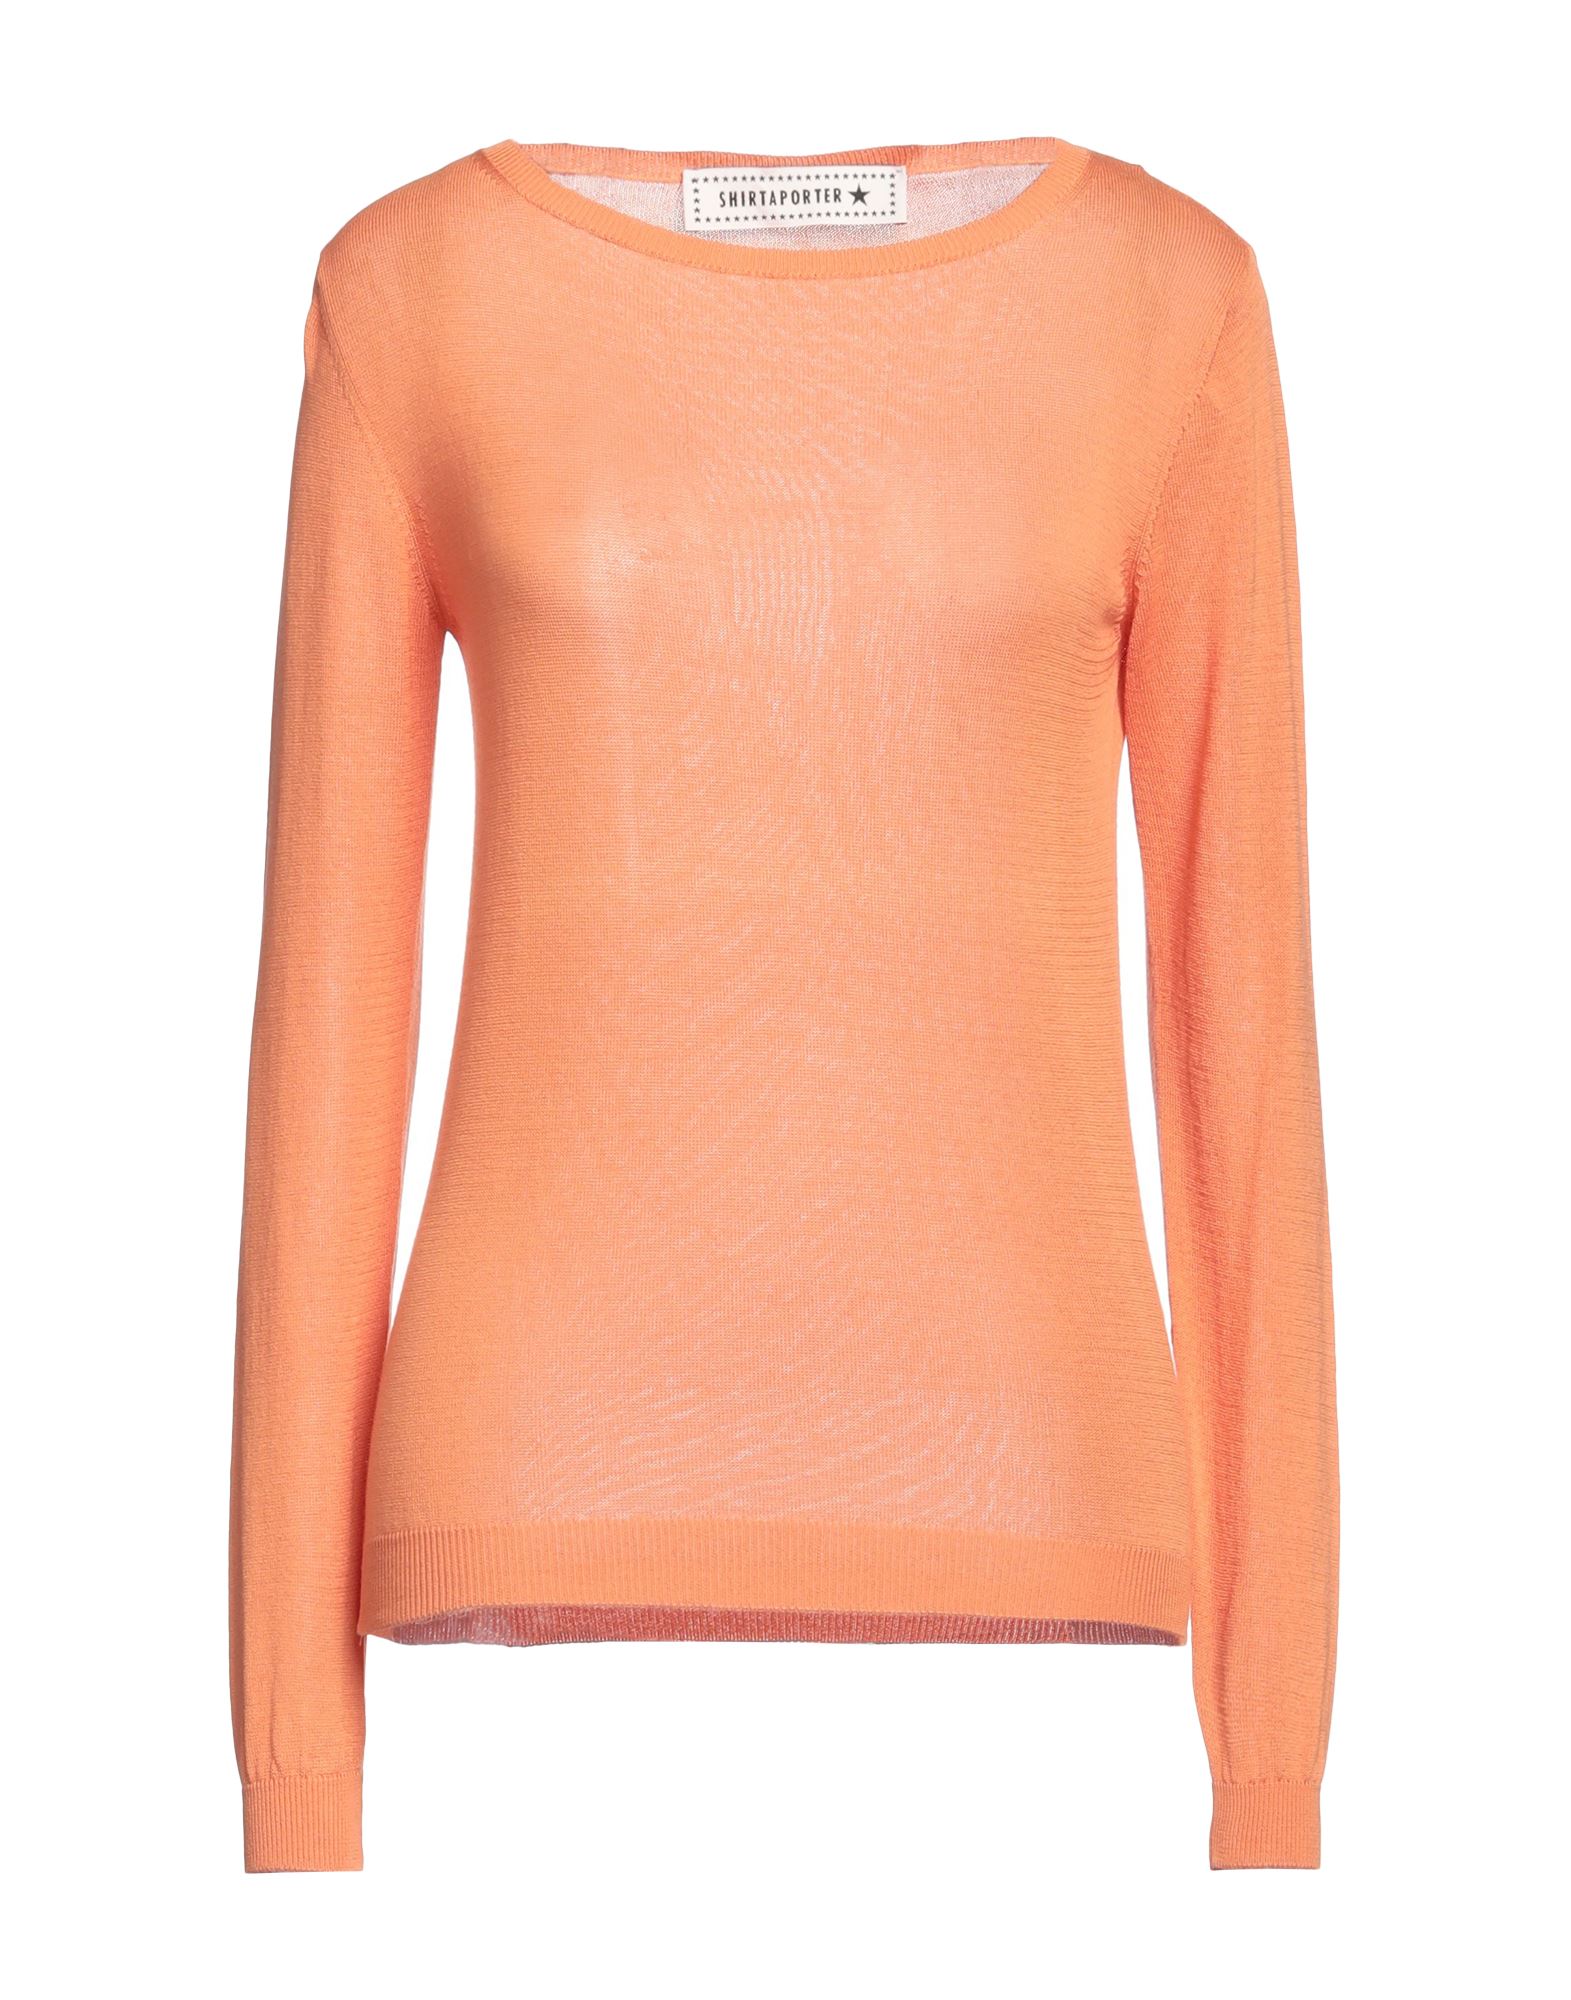 Shirtaporter Sweaters In Orange